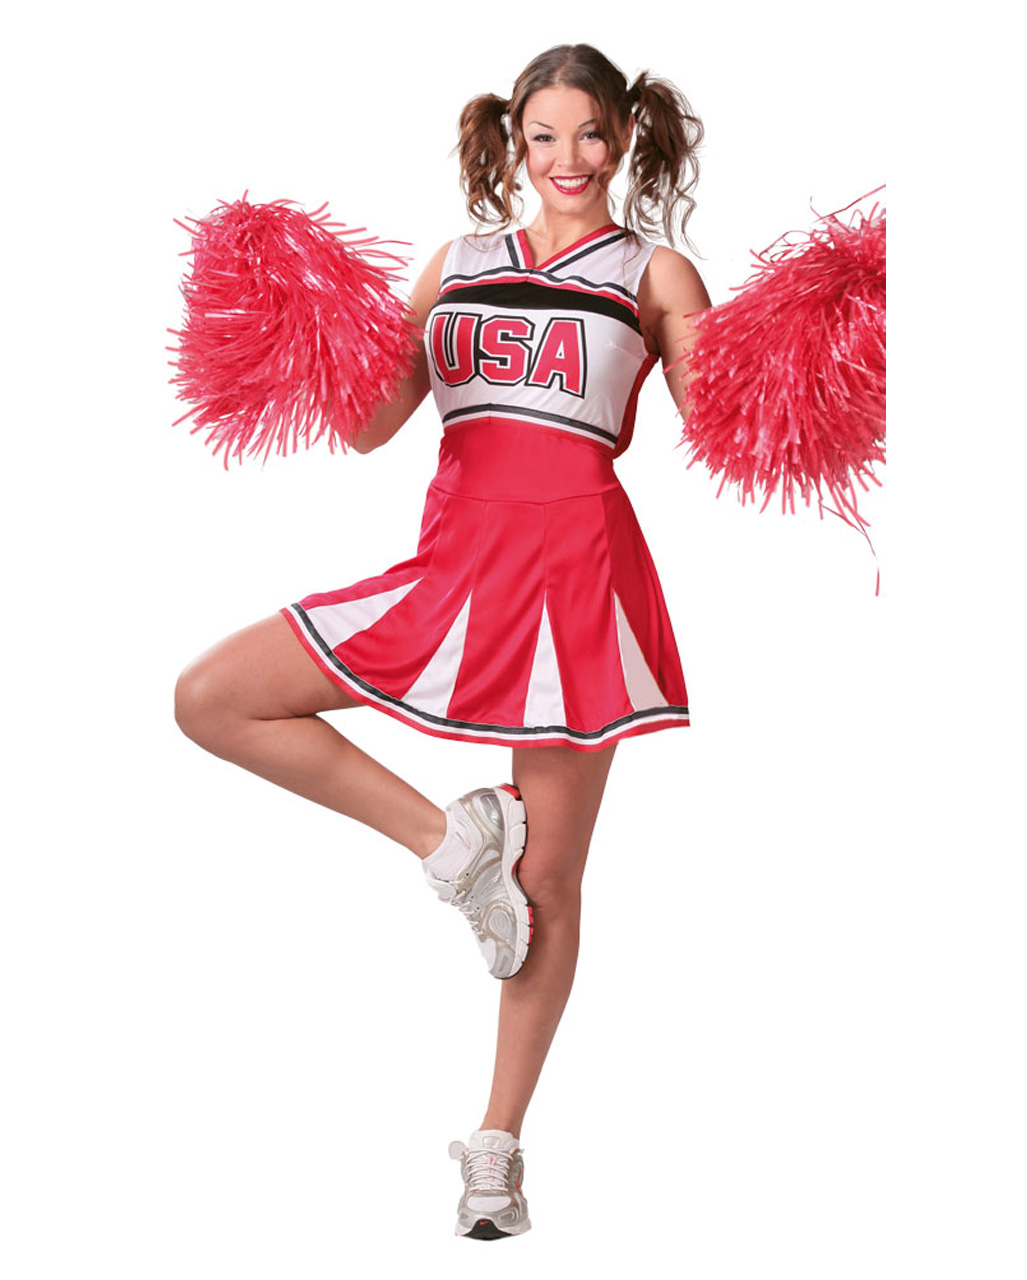 https://inst-1.cdn.shockers.de/hs_cdn/out/pictures/master/product/1/cheerleader-kostuem-usa--sexy-kostuemkleid--cheerleaderuniform-kostuem--cheerleader-costume--bild1--28892.jpg